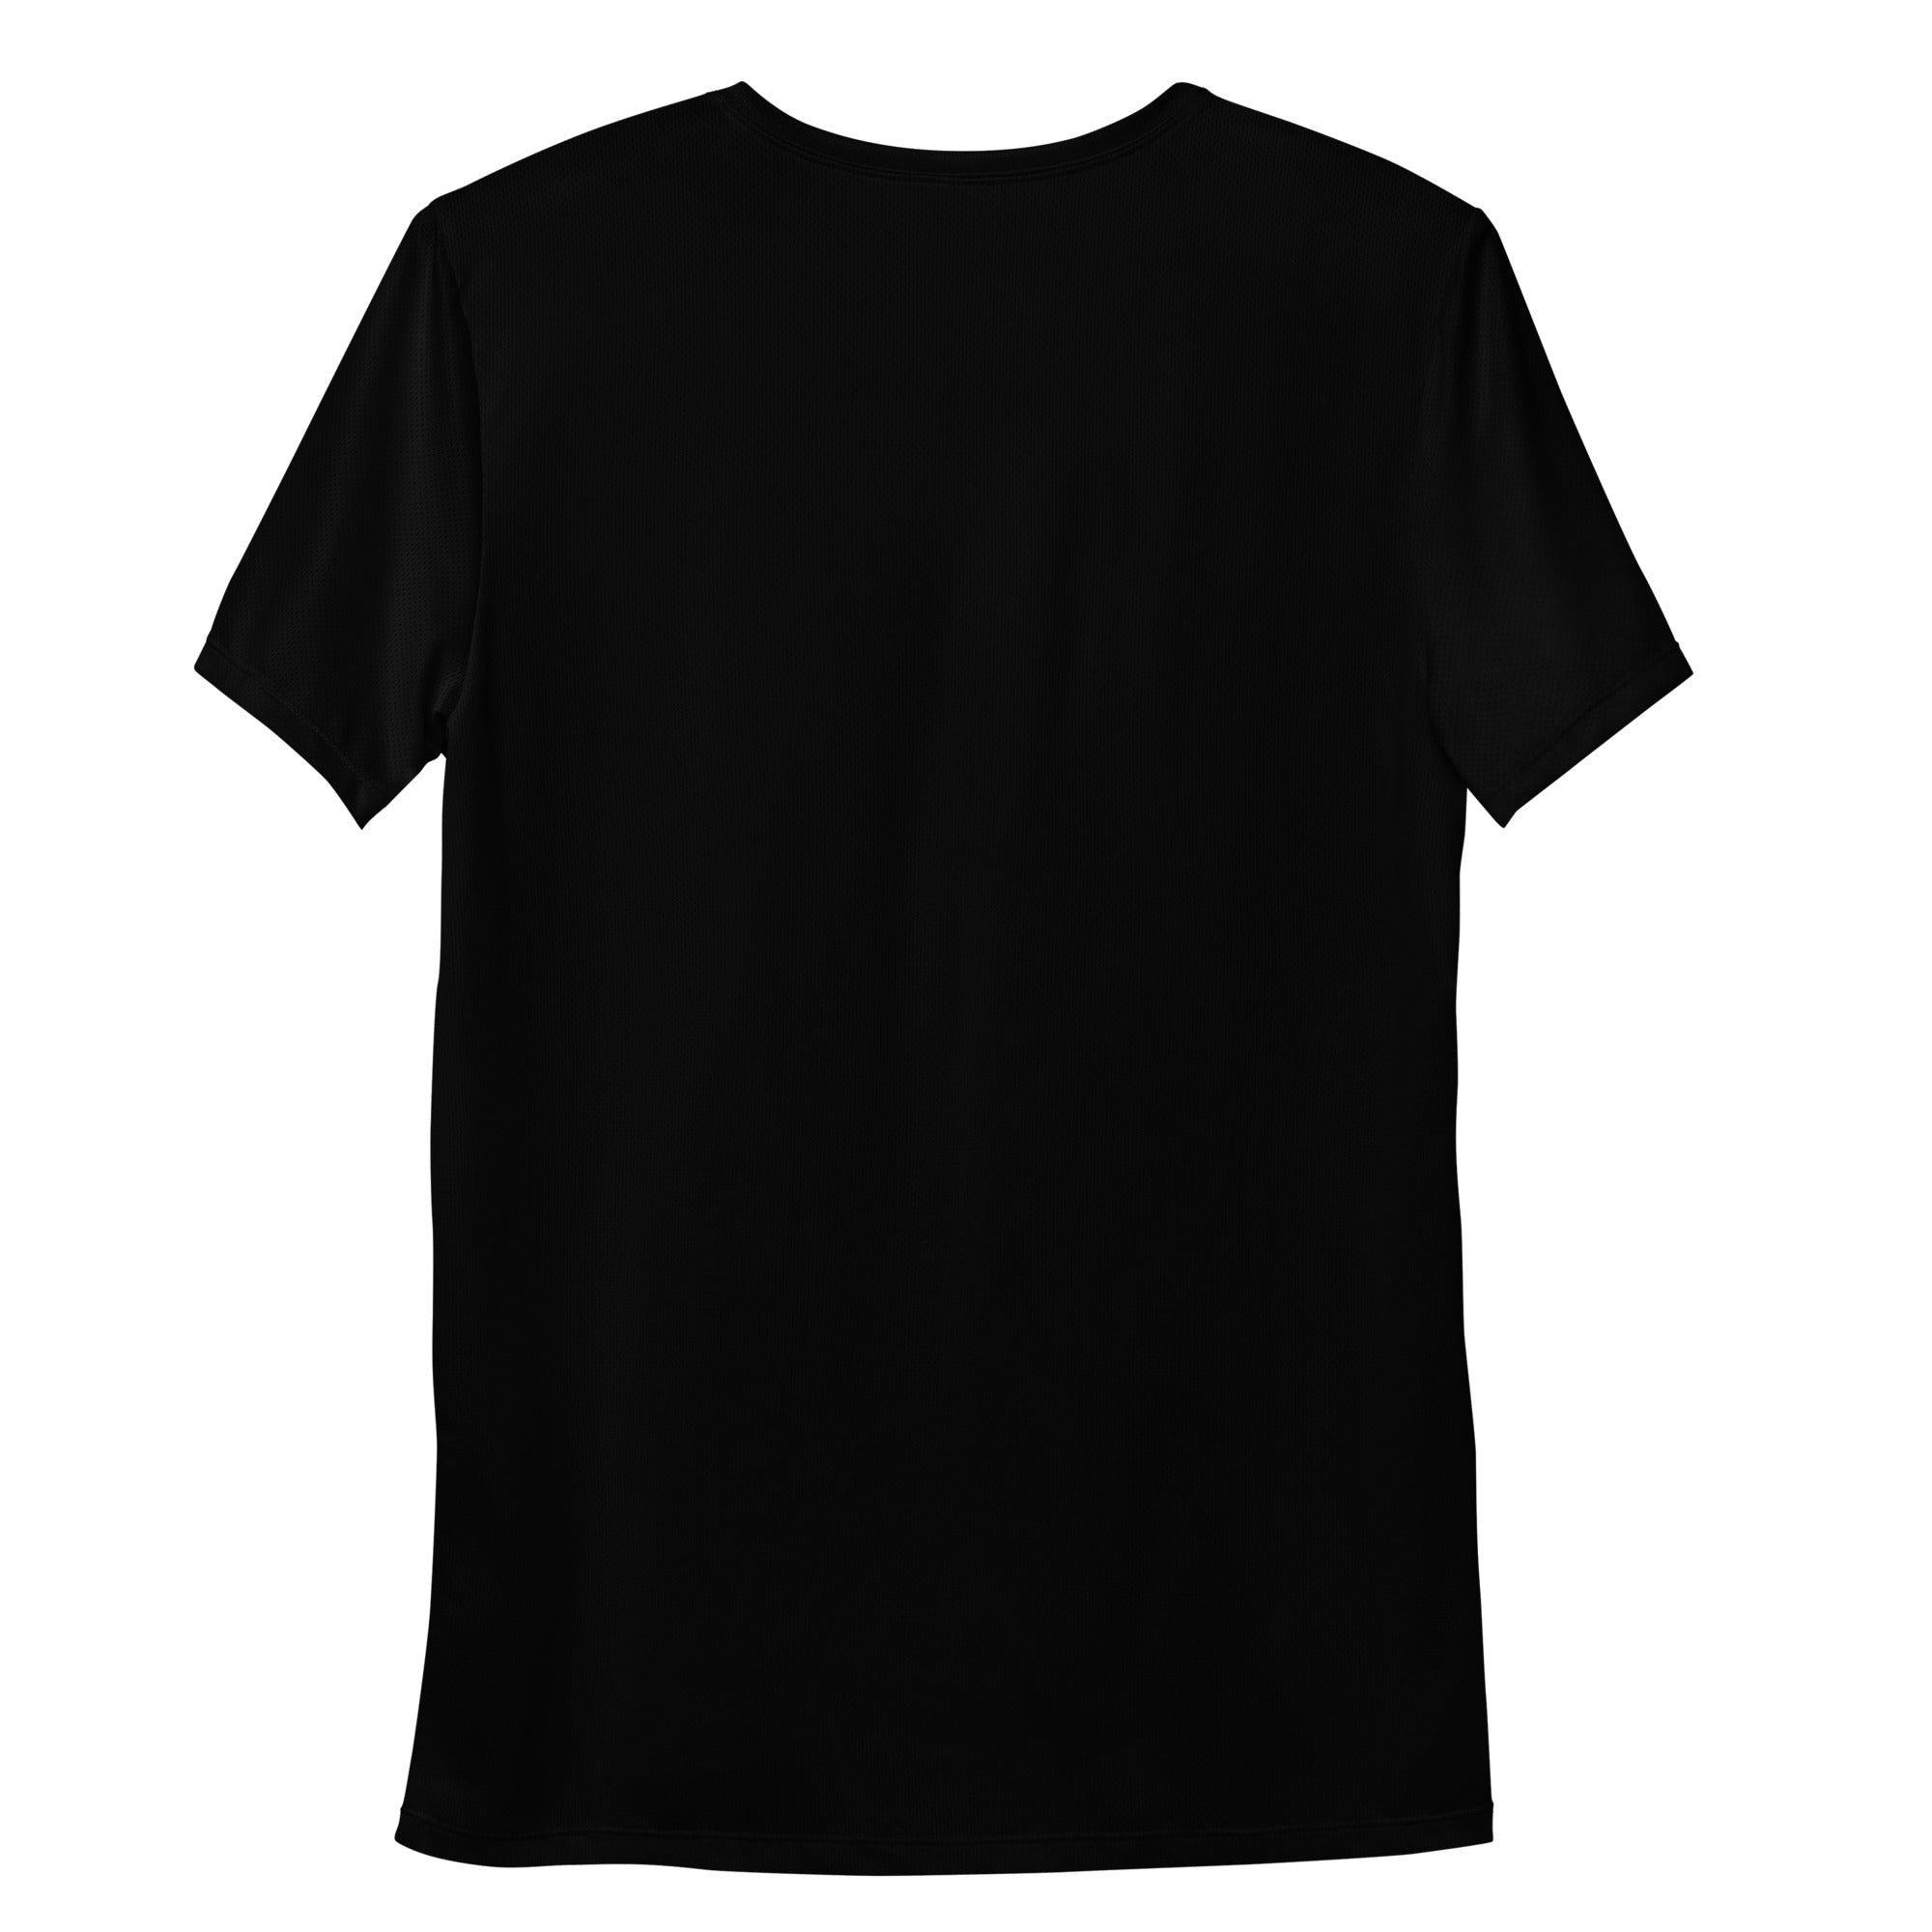 PHNY Performance Short Sleeve Shirt Men's Athletic T-shirt